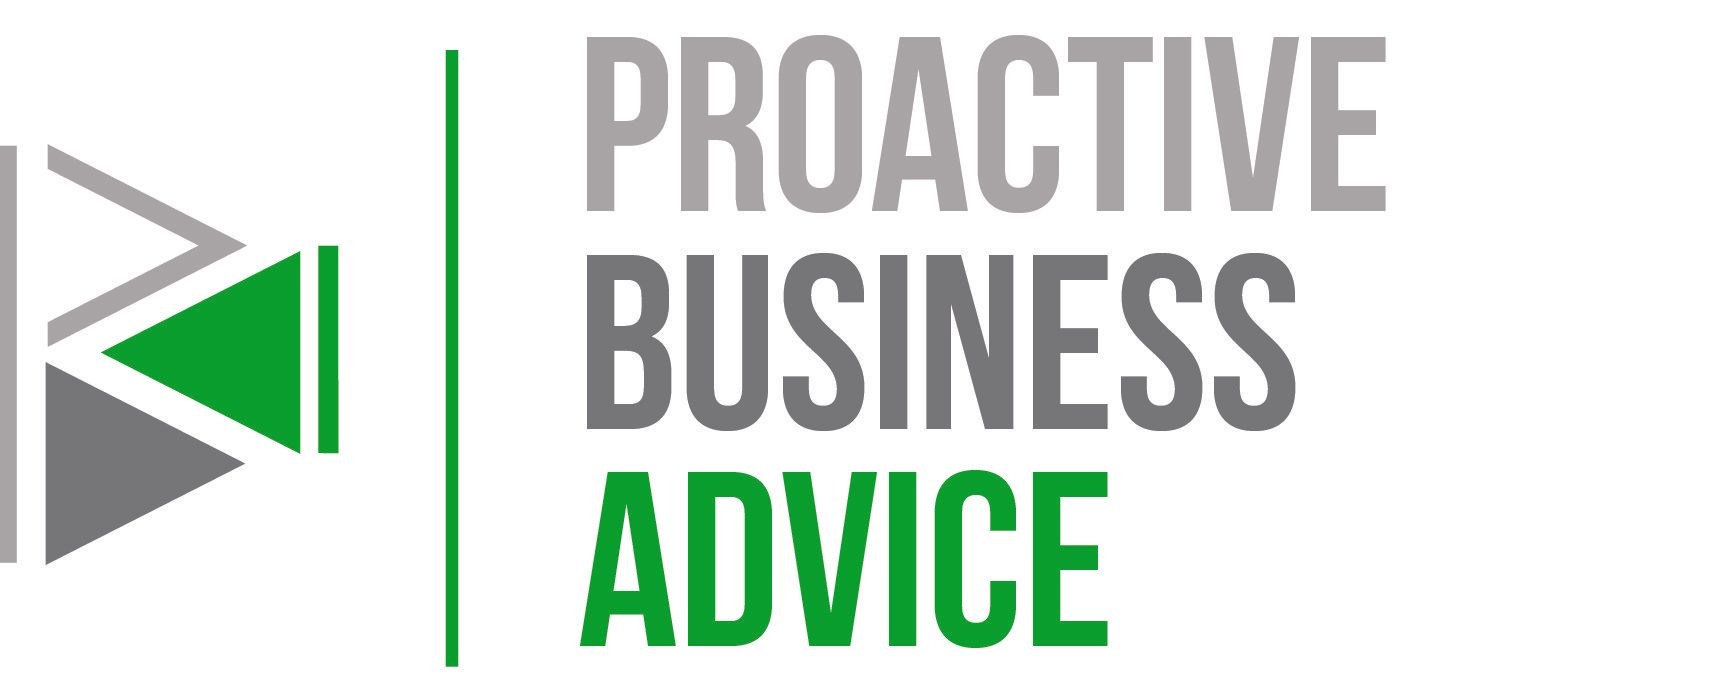 Proactive Business Advice